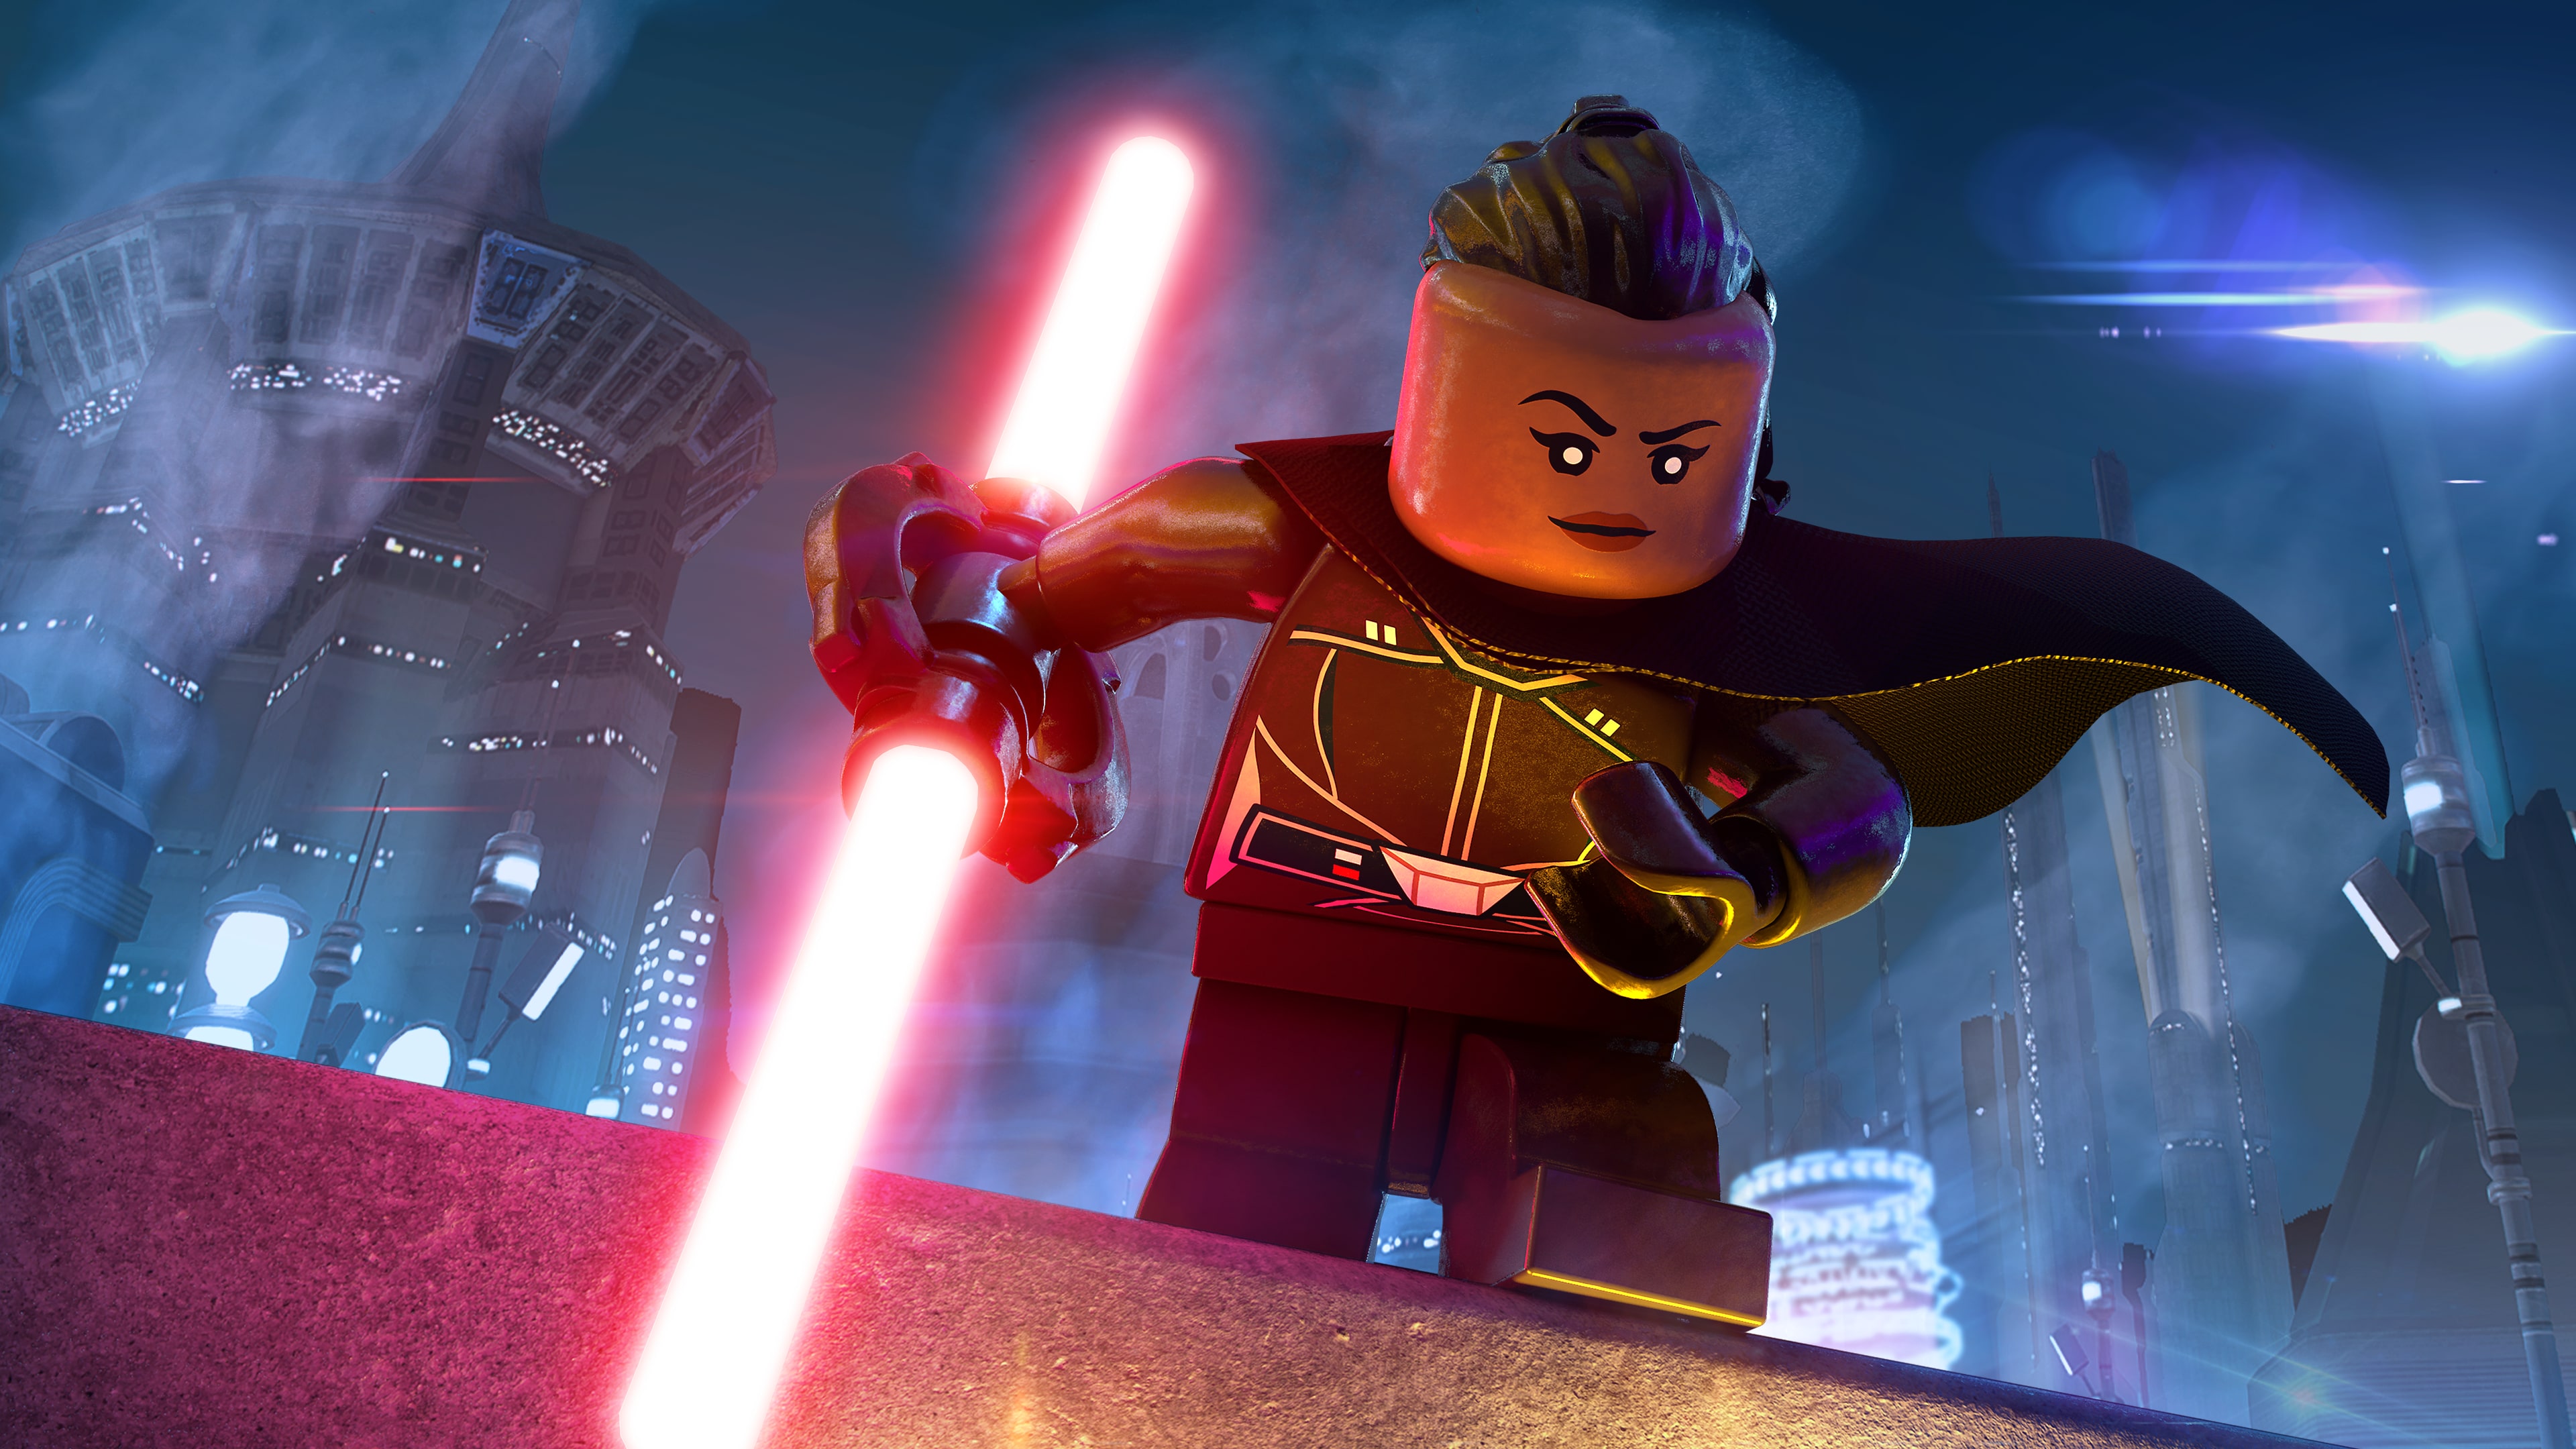 LEGO® Star Wars™: The Skywalker Saga Obi-Wan Kenobi Character Pack